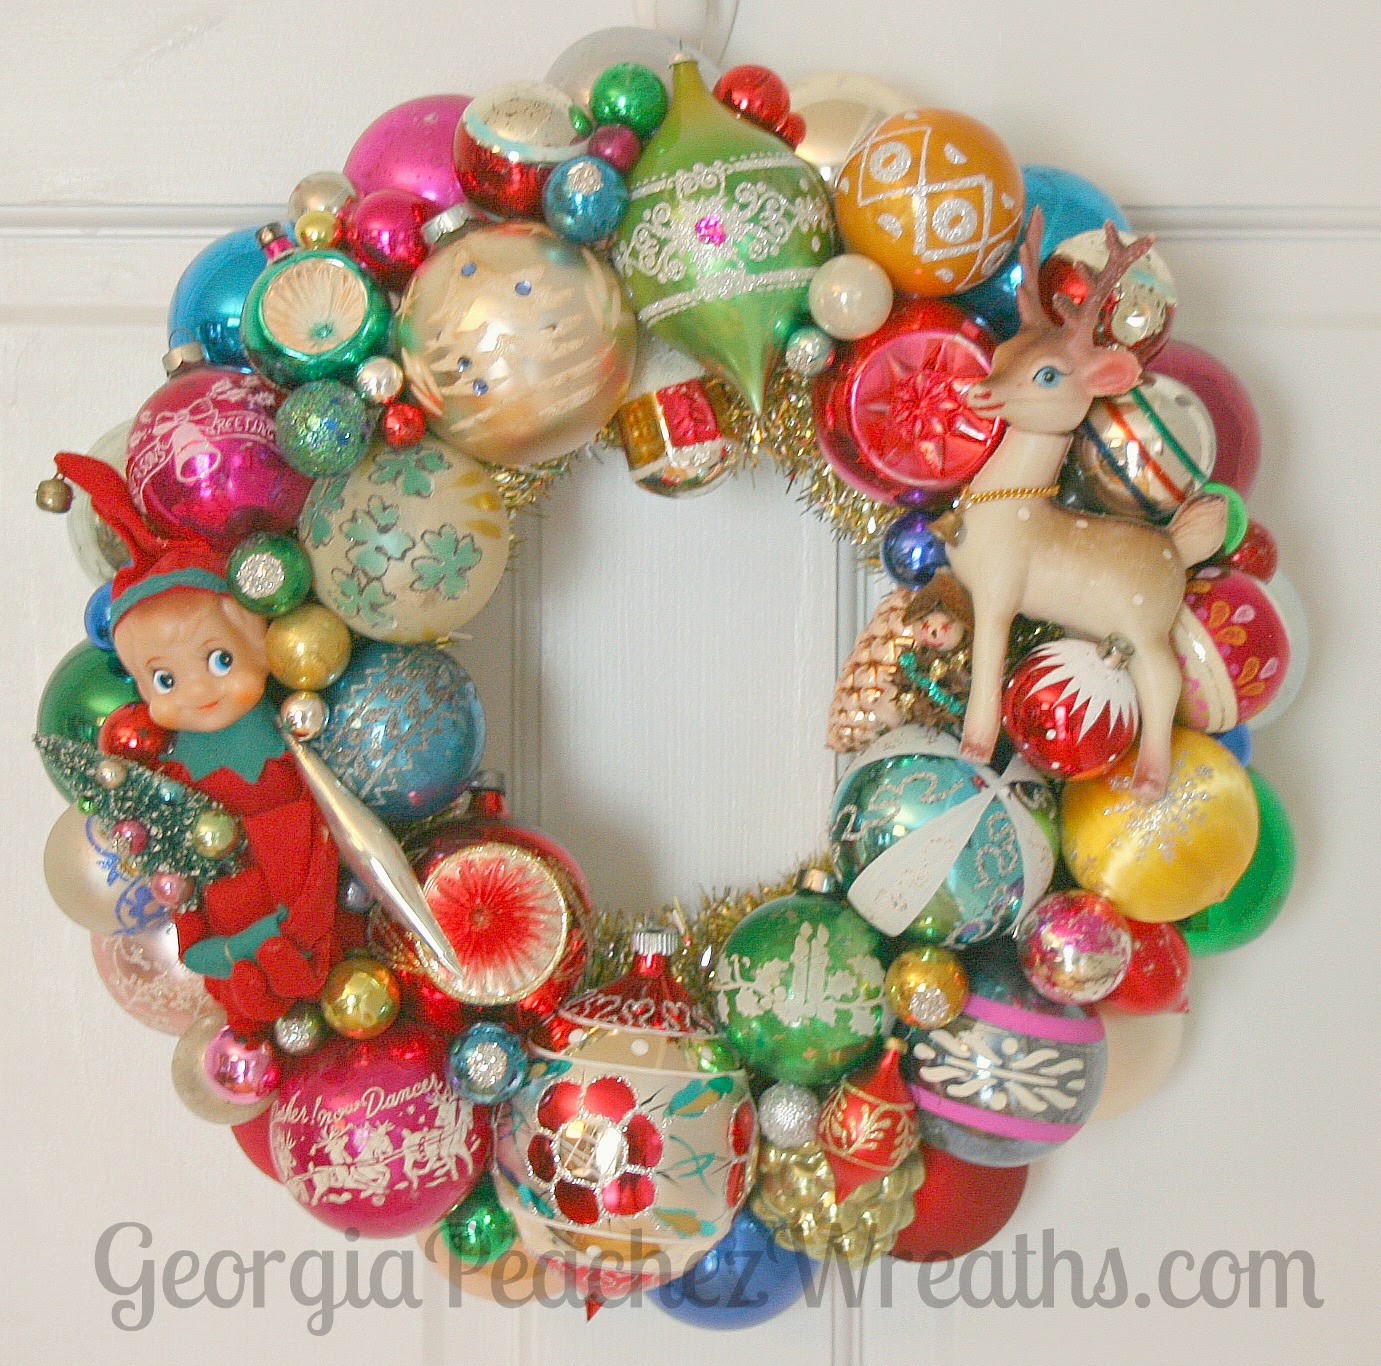 The Wreath Blog by GeorgiaPeachez